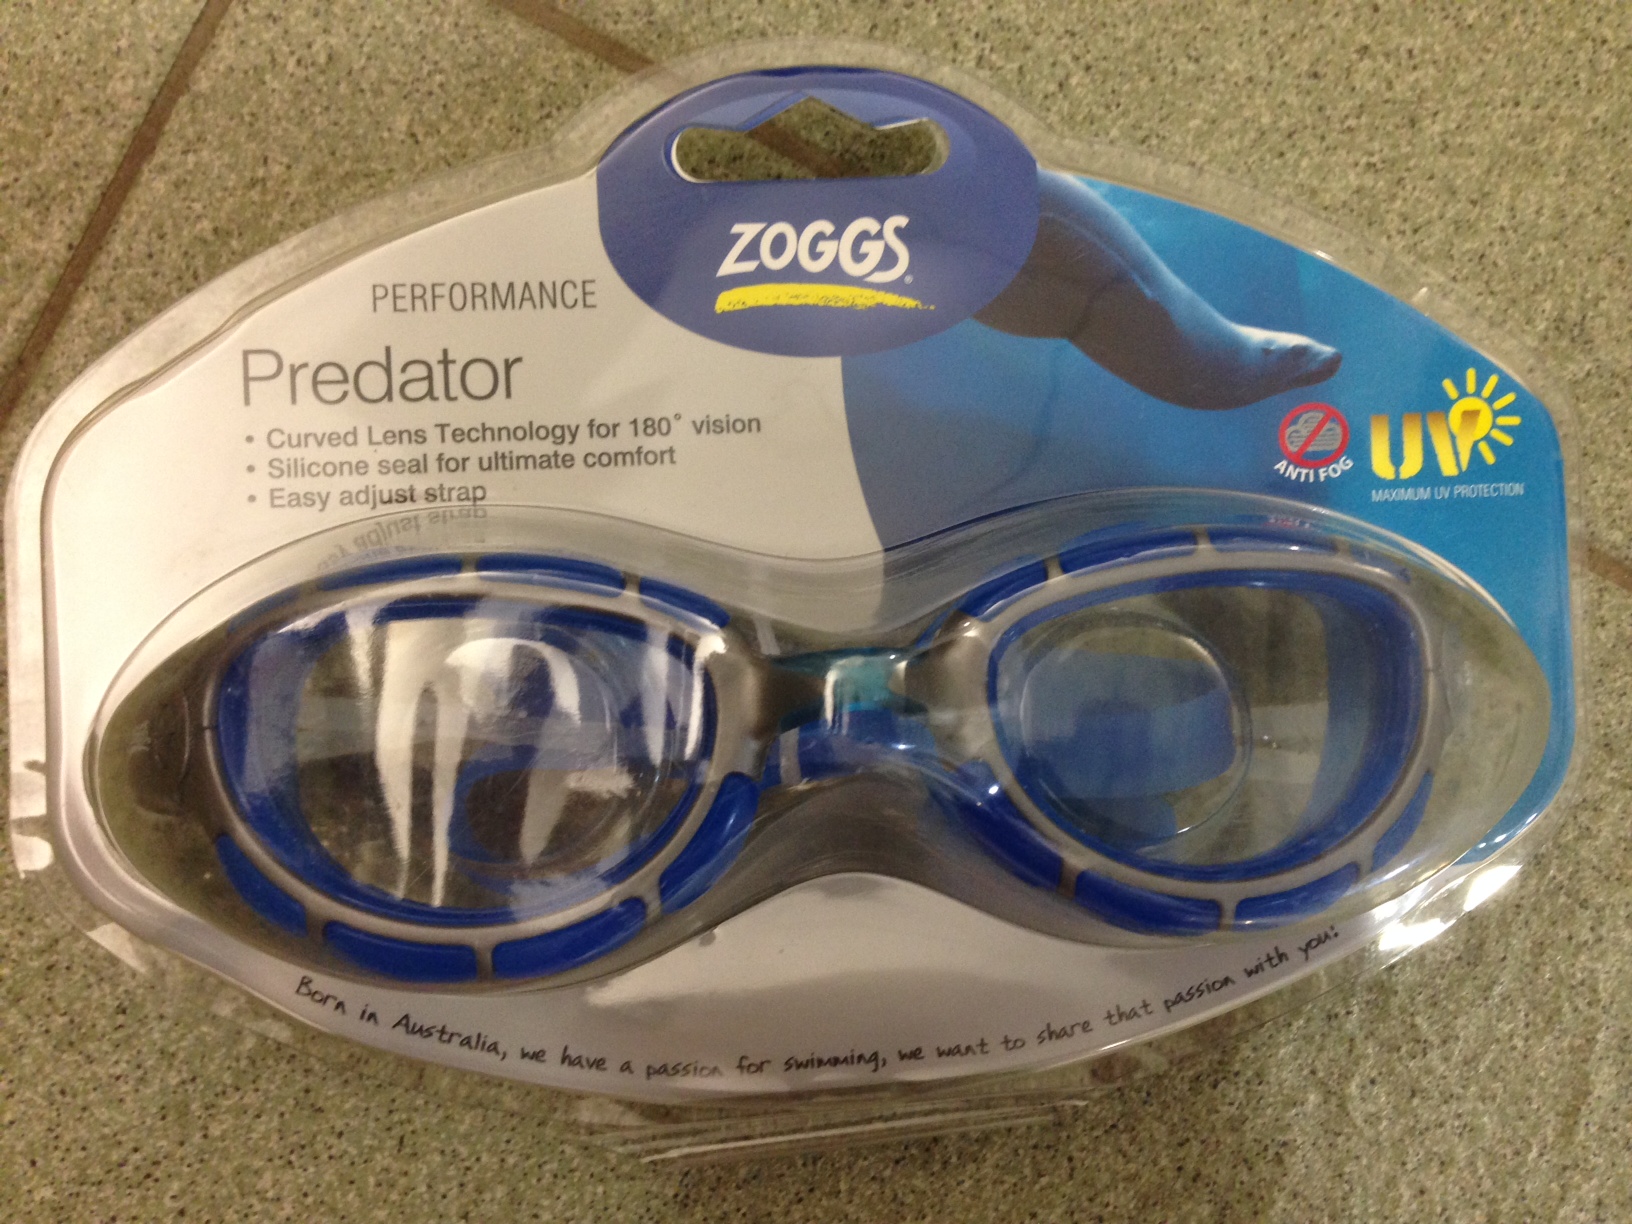 Zoggs Predator Wiro-Frame Goggles - Review It